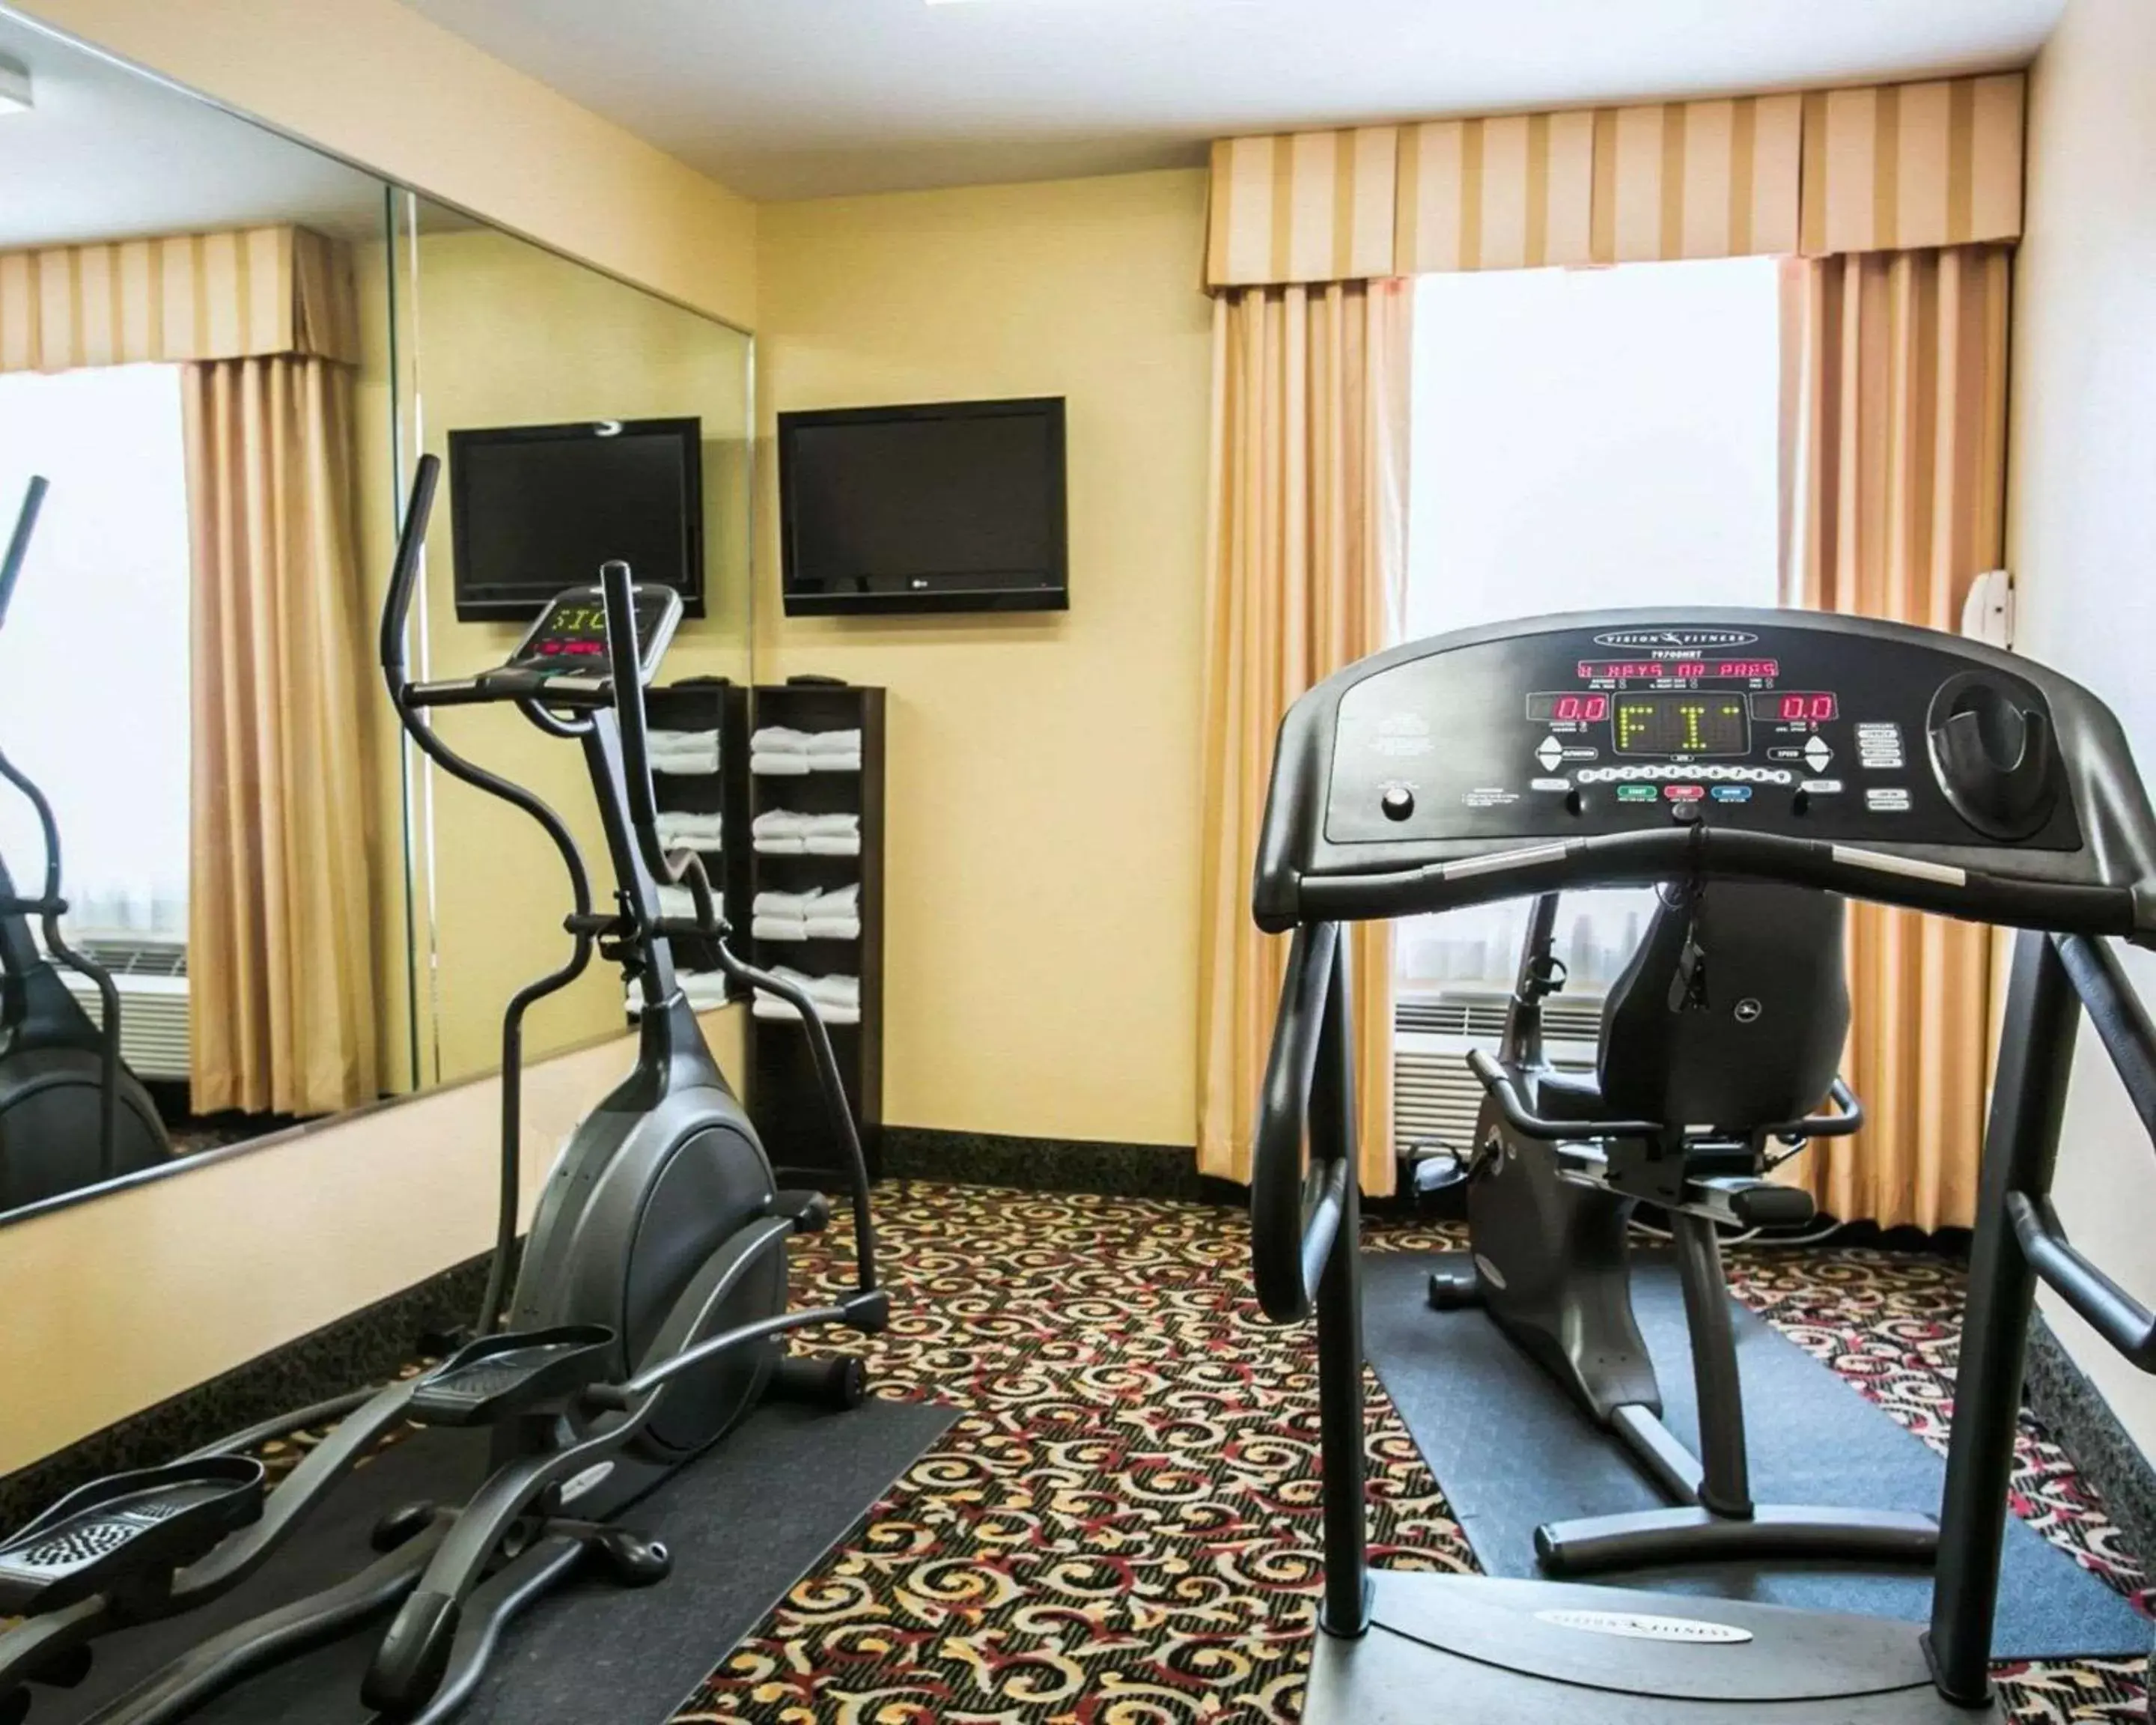 Fitness centre/facilities, Fitness Center/Facilities in Sleep Inn & Suites New Braunfels